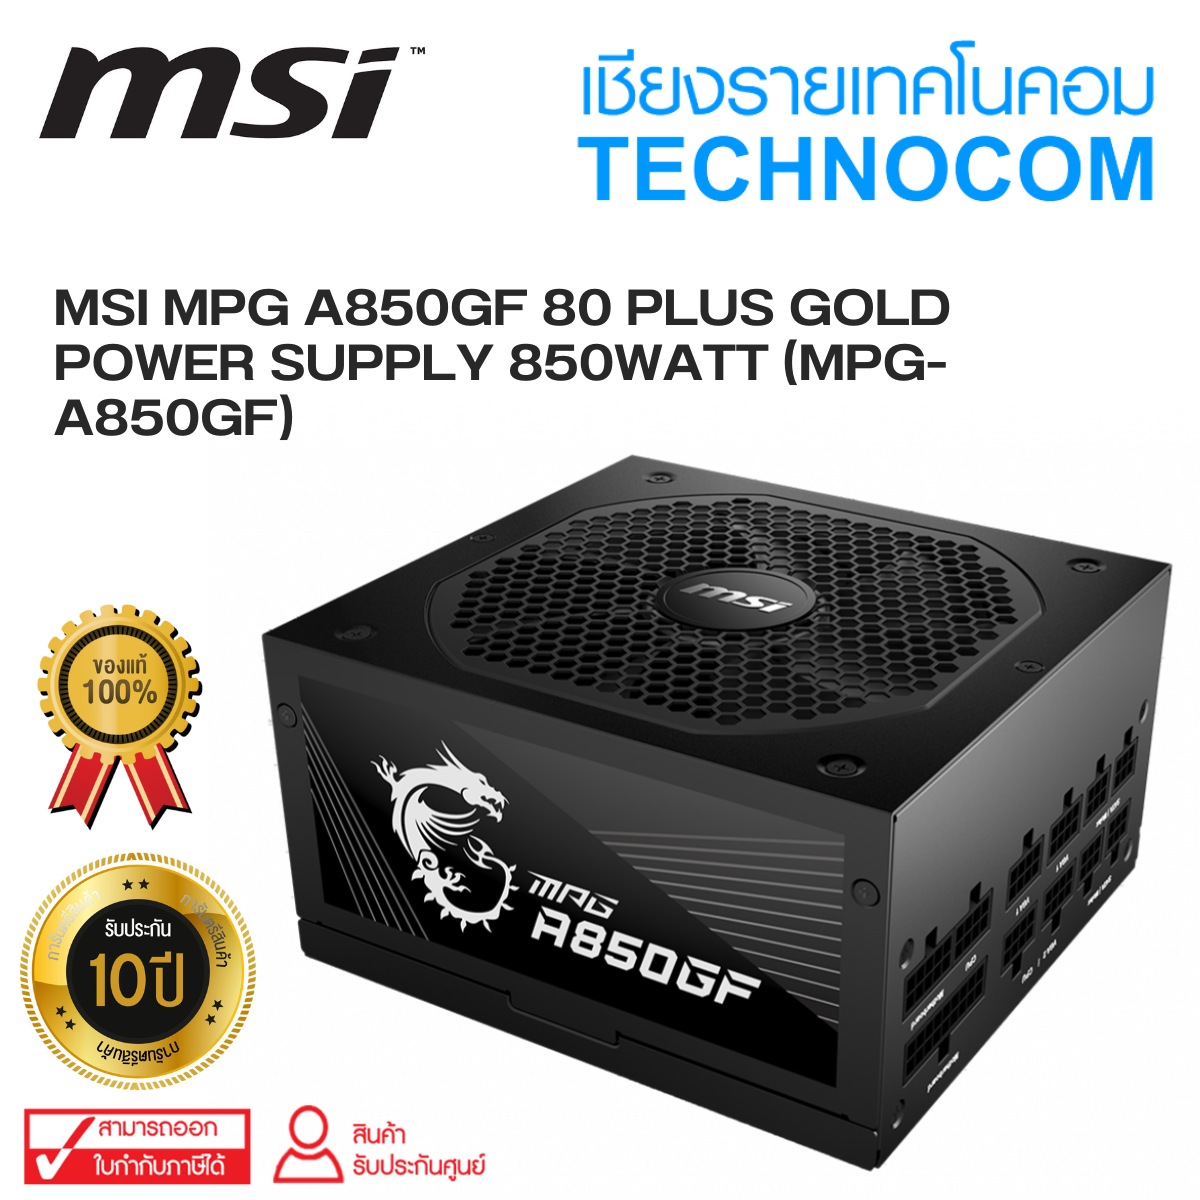 MSI MPG A850GF 80 PLUS GOLD POWER SUPPLY 850WATT (MPG-A850GF)